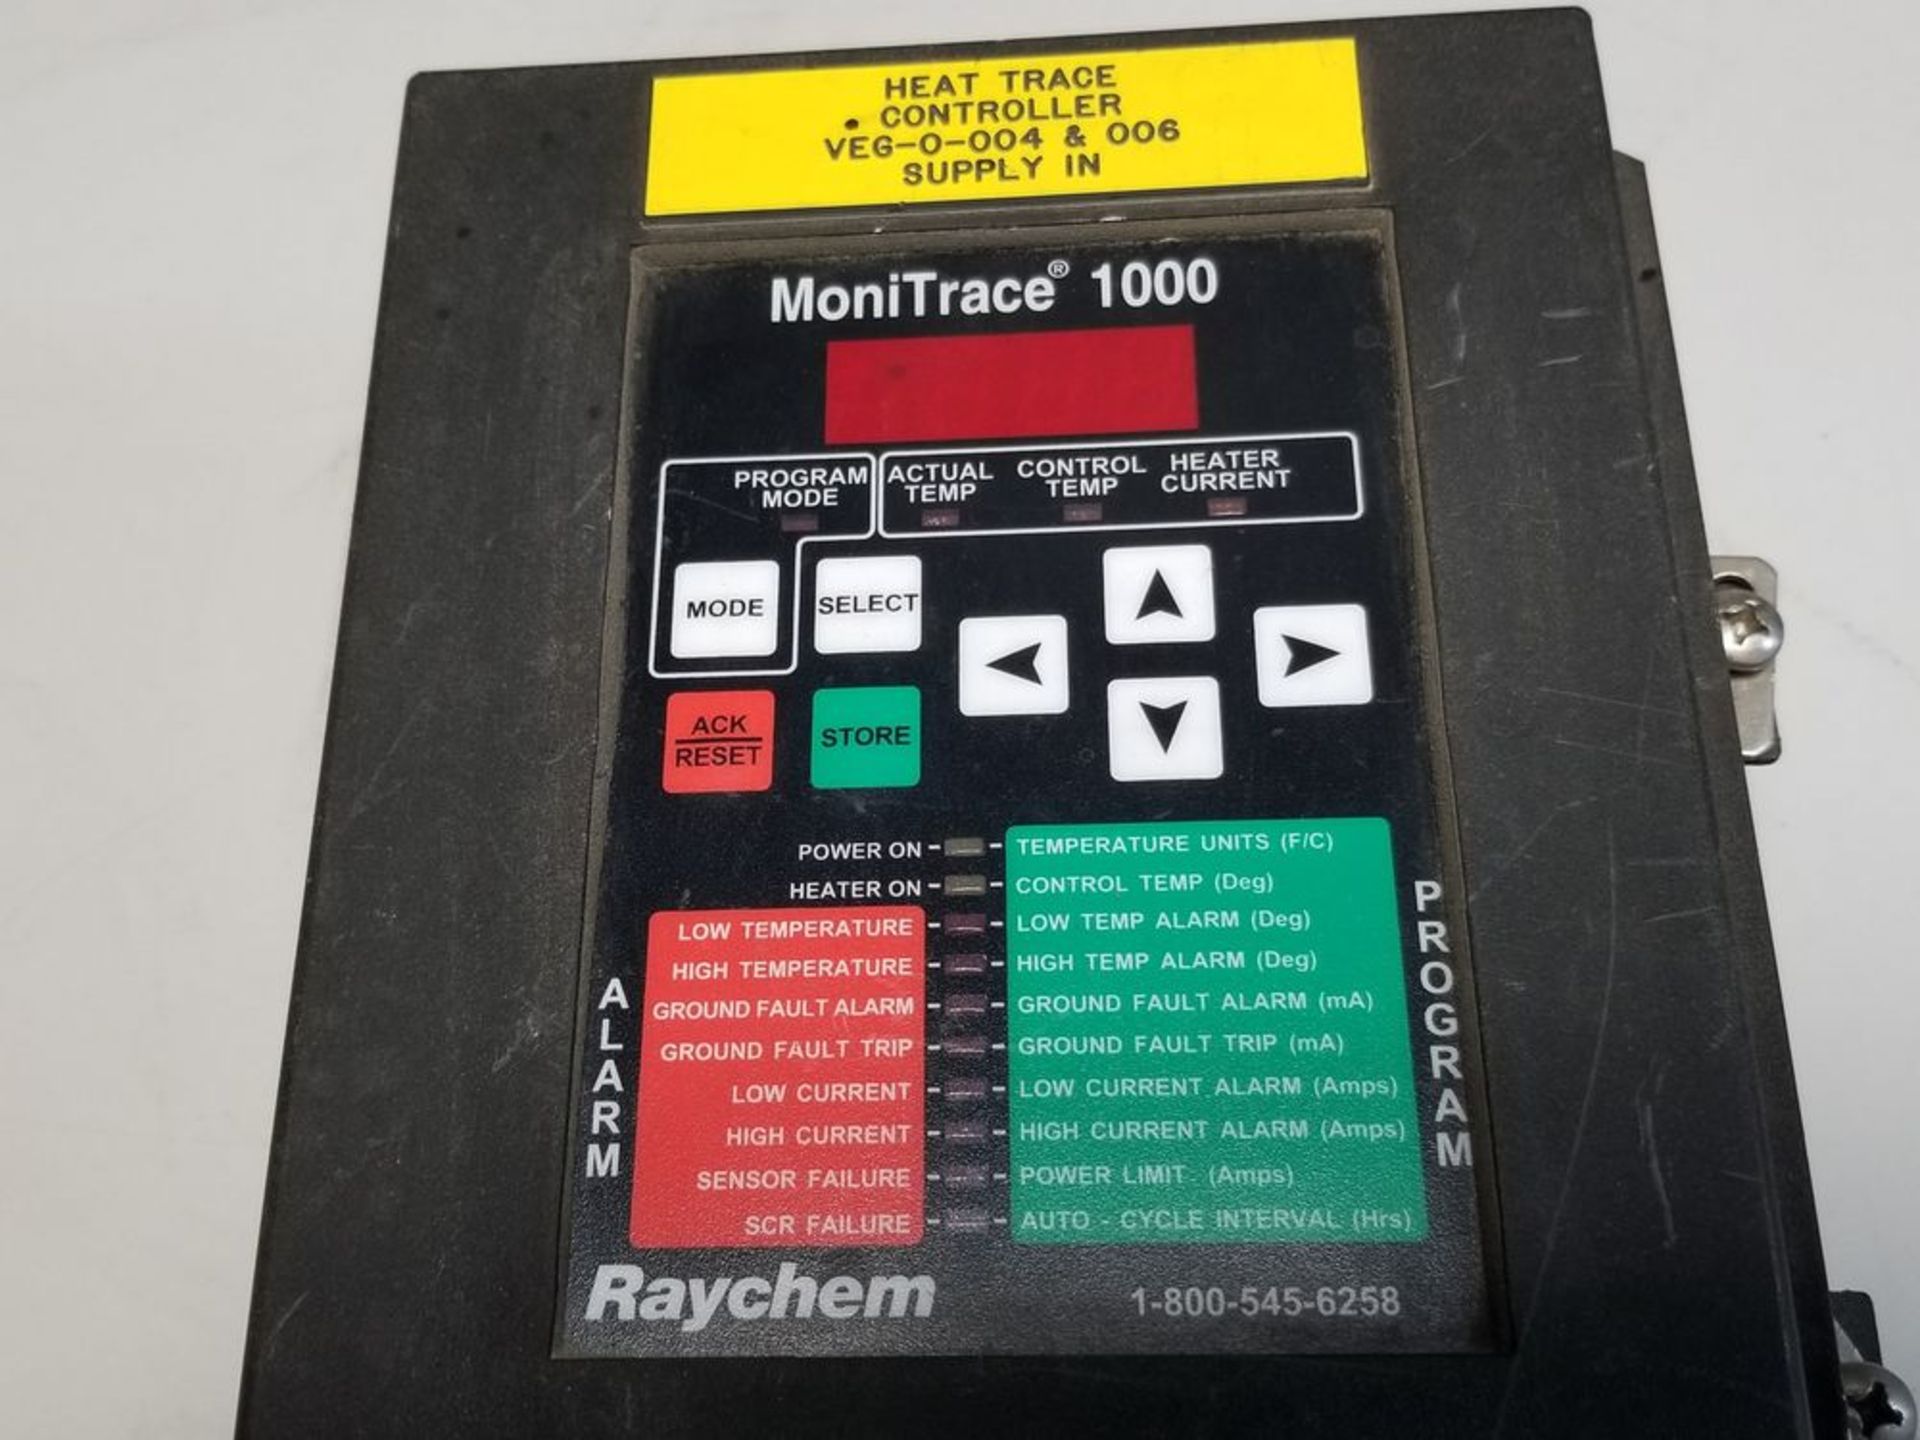 Raychem Heat Tracing Controller Operator Interface - Image 2 of 4